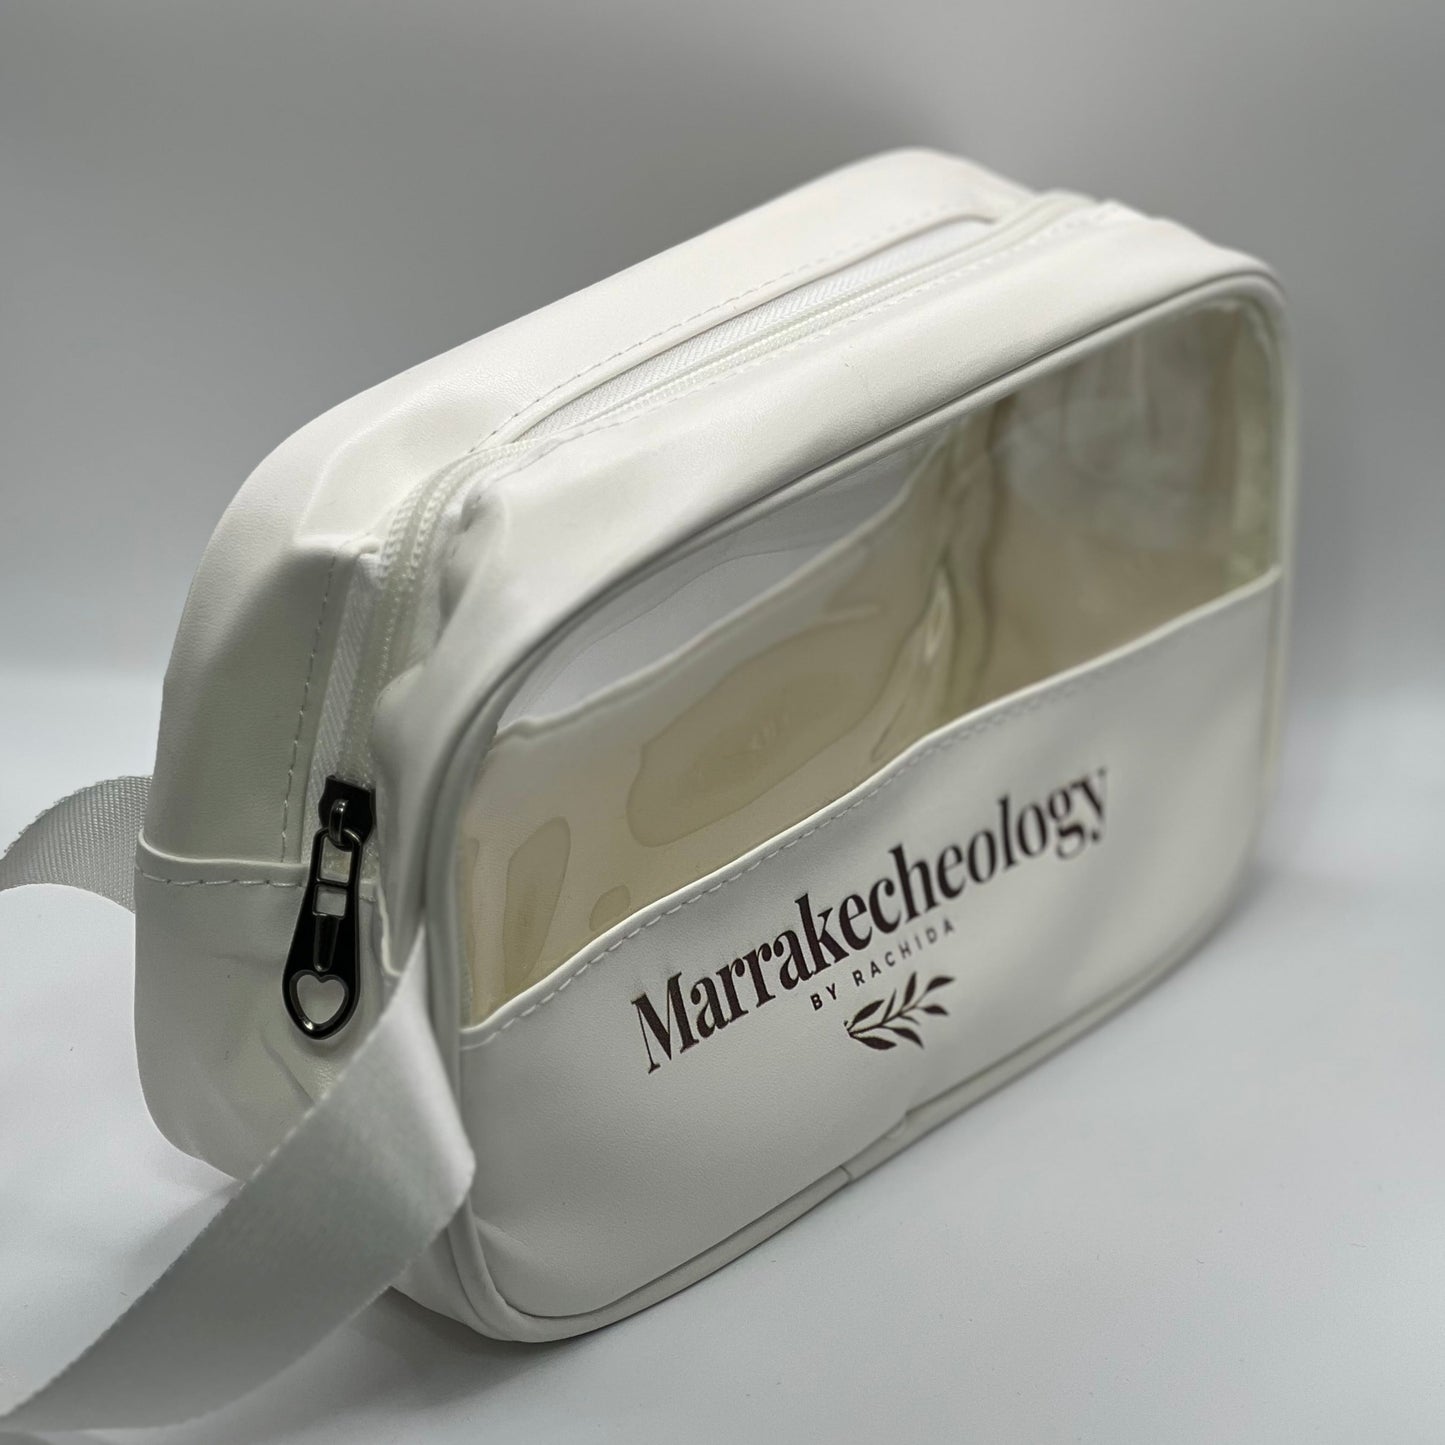 Marrakecheology toiletry bag